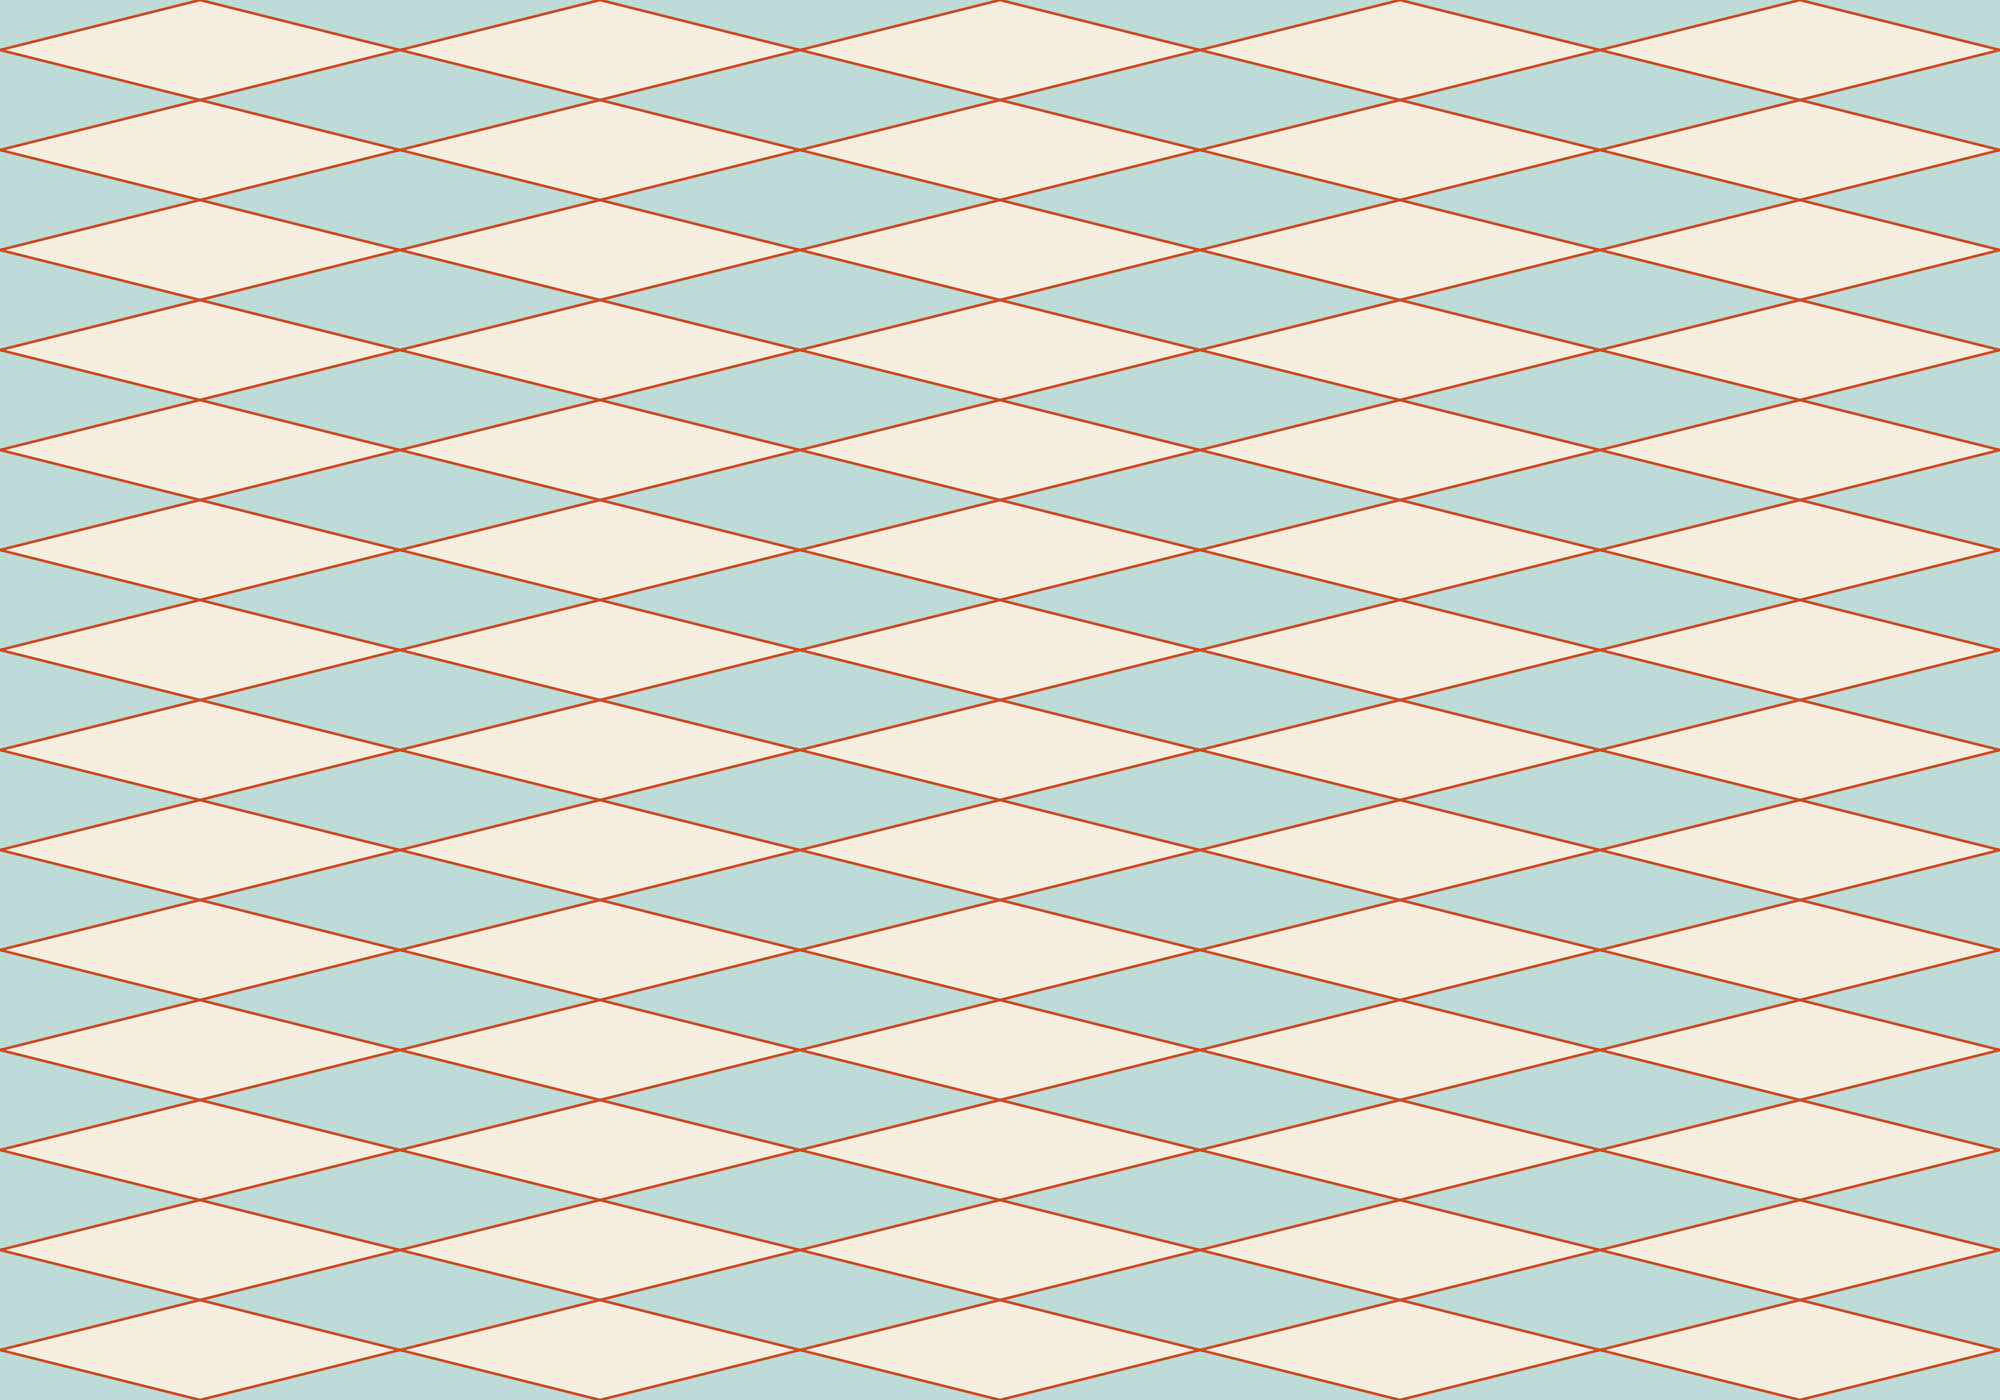             Retro behang met grafisch ruitpatroon - crème, turquoise, oranje | parelmoer glad vlies
        